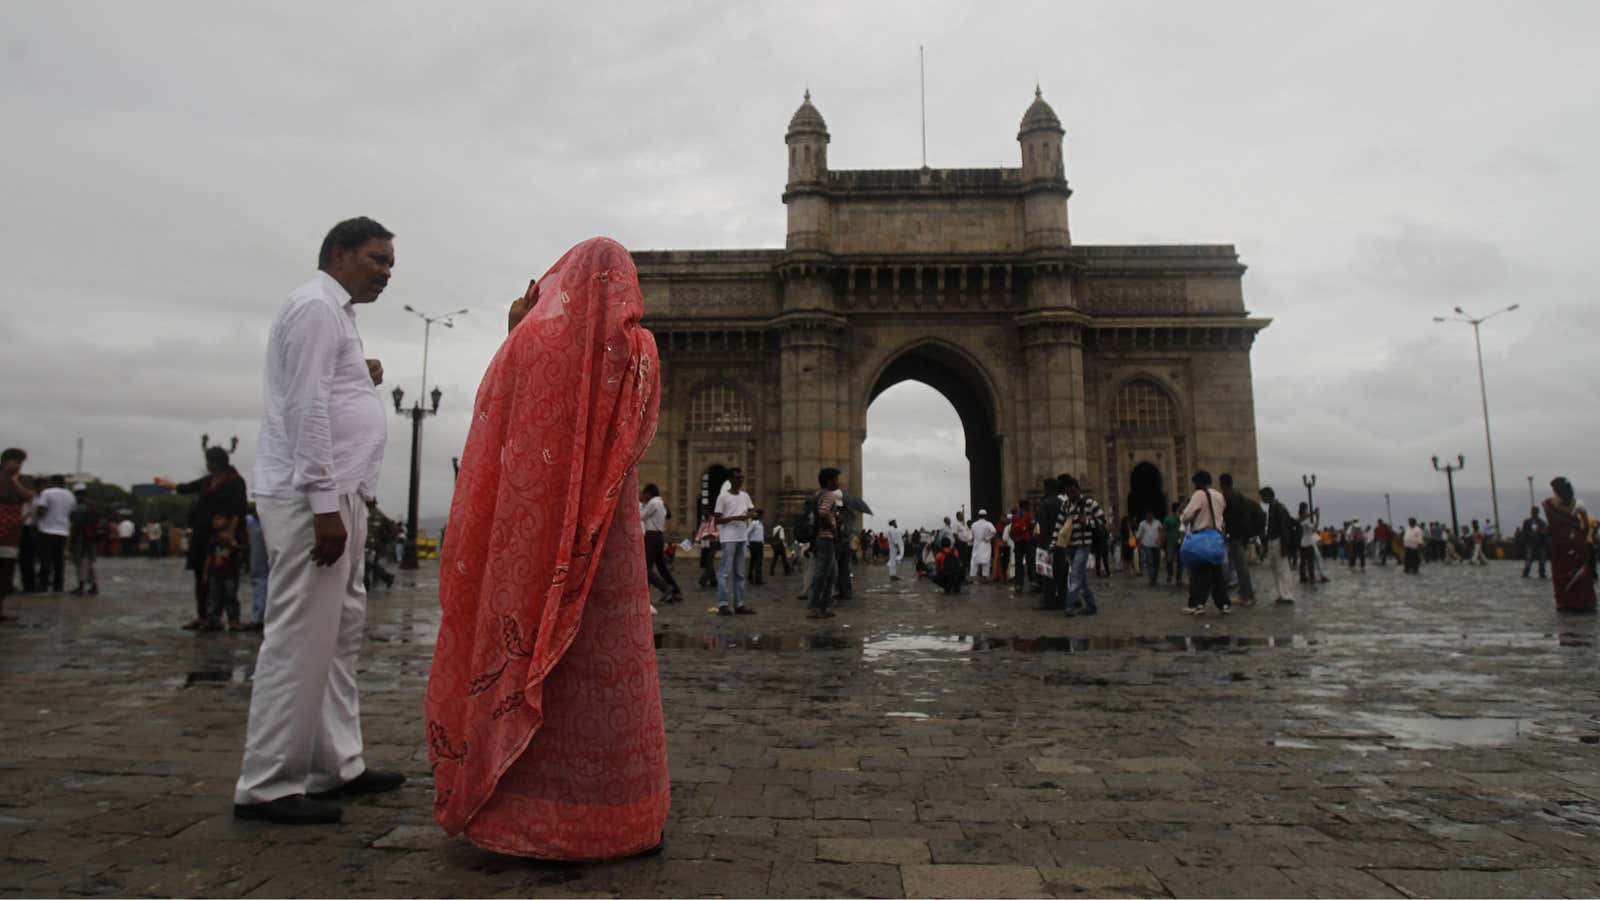 The Gateway of India: Popular tourist spot or secure defense establishment?